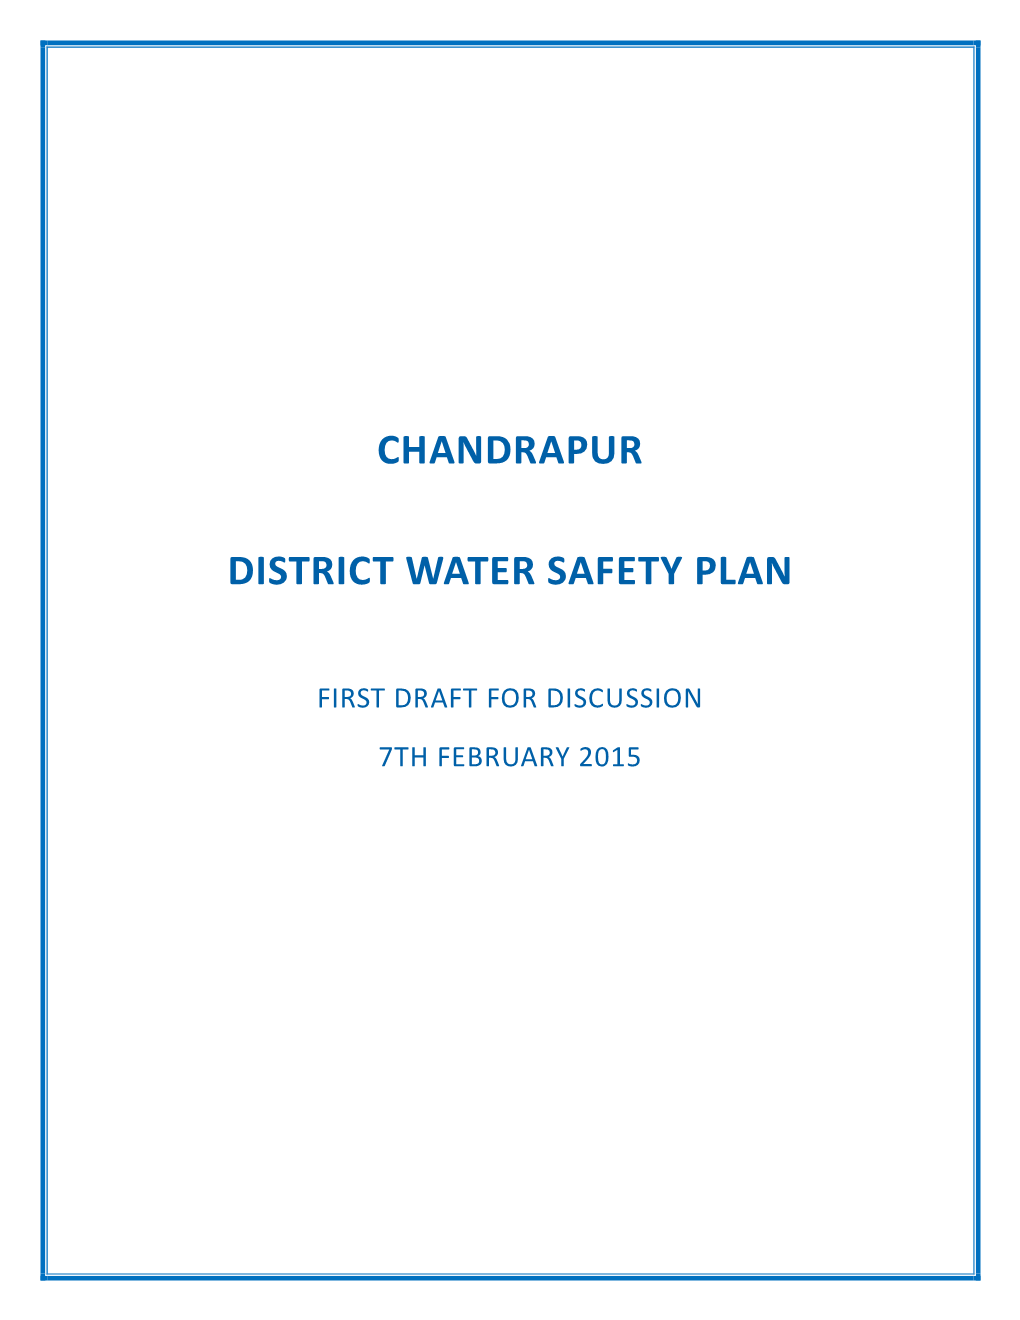 Chandrapur District Water Safety Plan